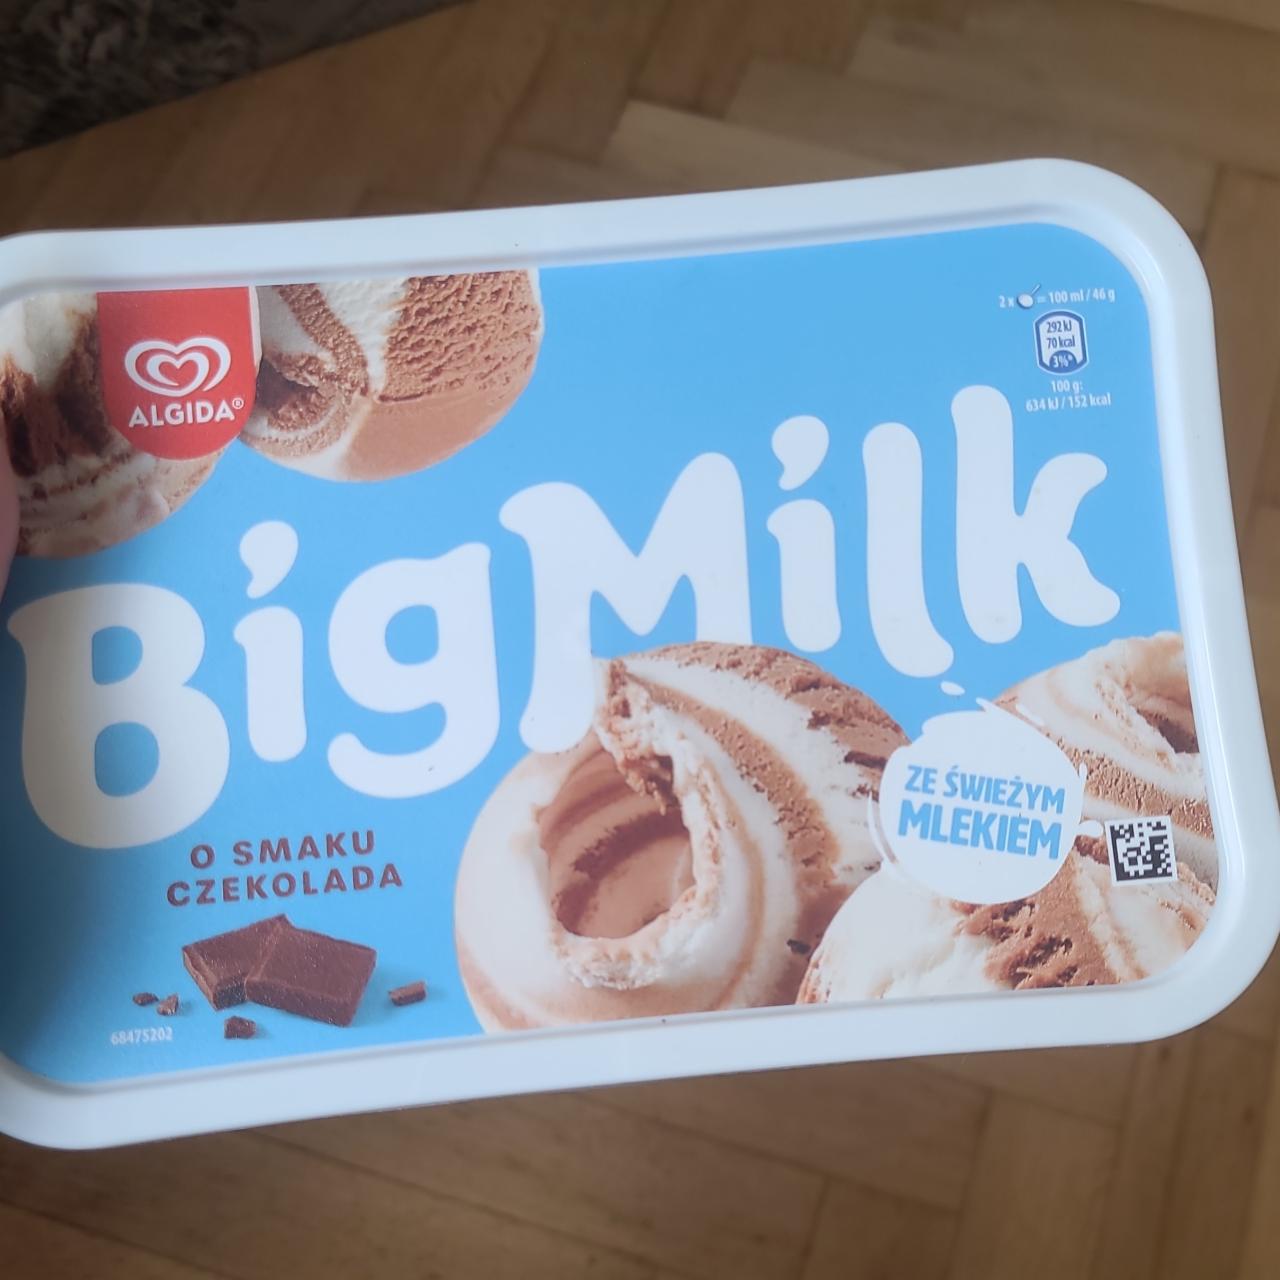 Фото - Шоколадное мороженое Big Milk o smaku czekolada lody Algida